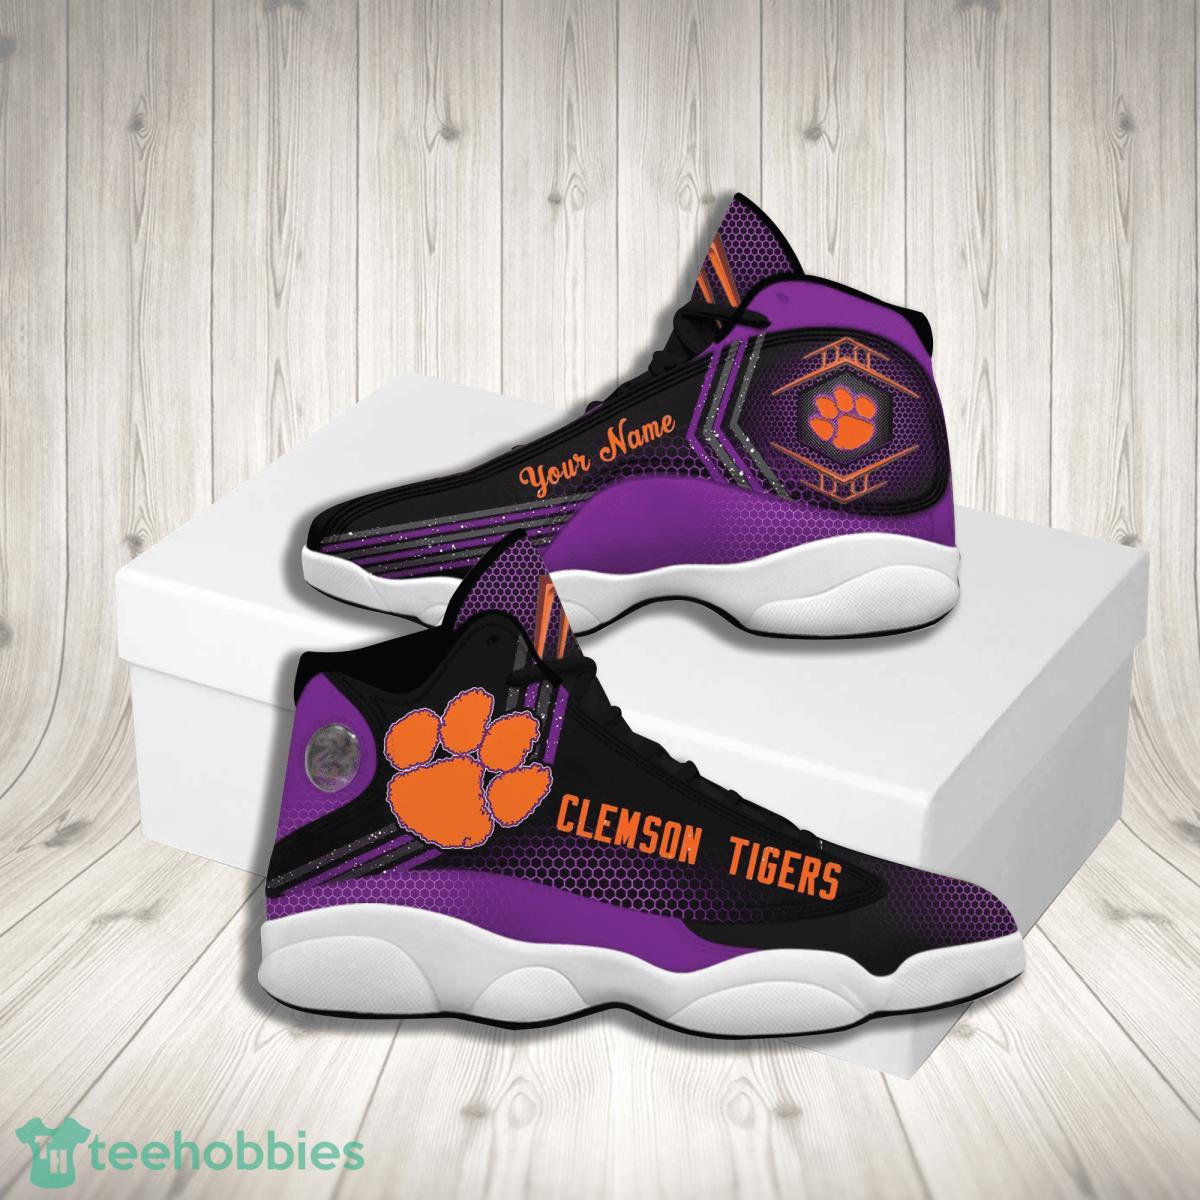 Clemson Tigers Football Team Custom Name Air Jordan 13 Sneakers For Fans Product Photo 1